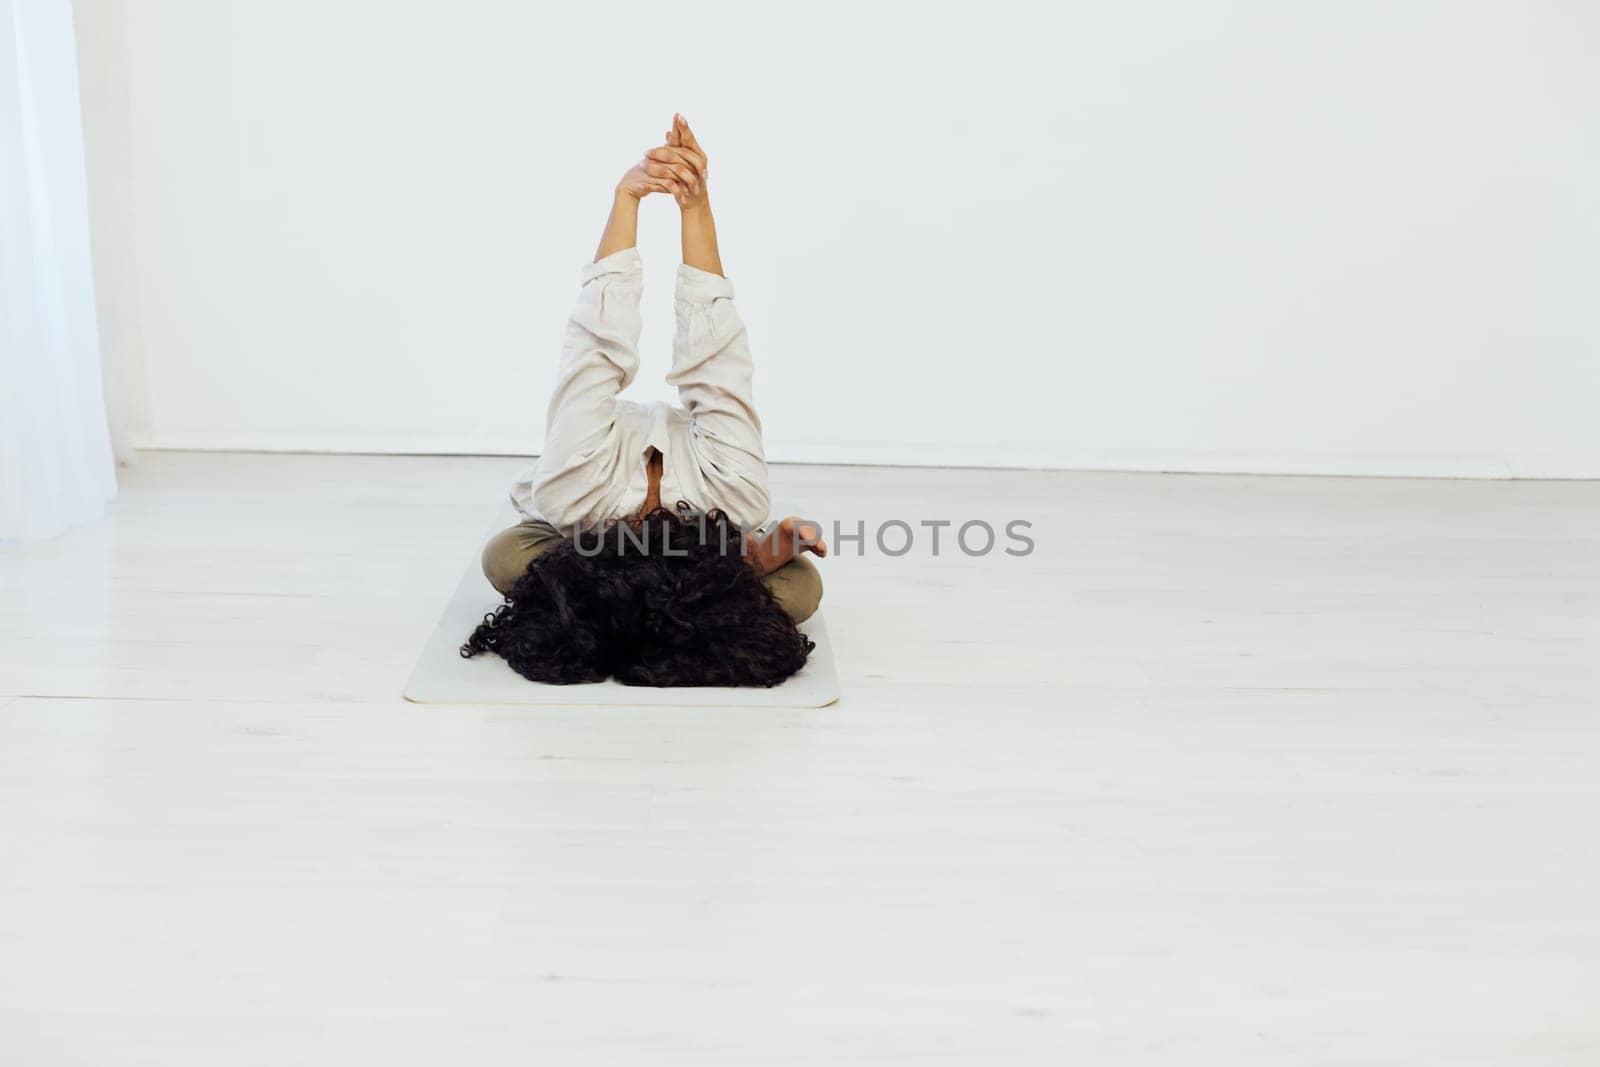 lotus pose training in the studio woman doing yoga